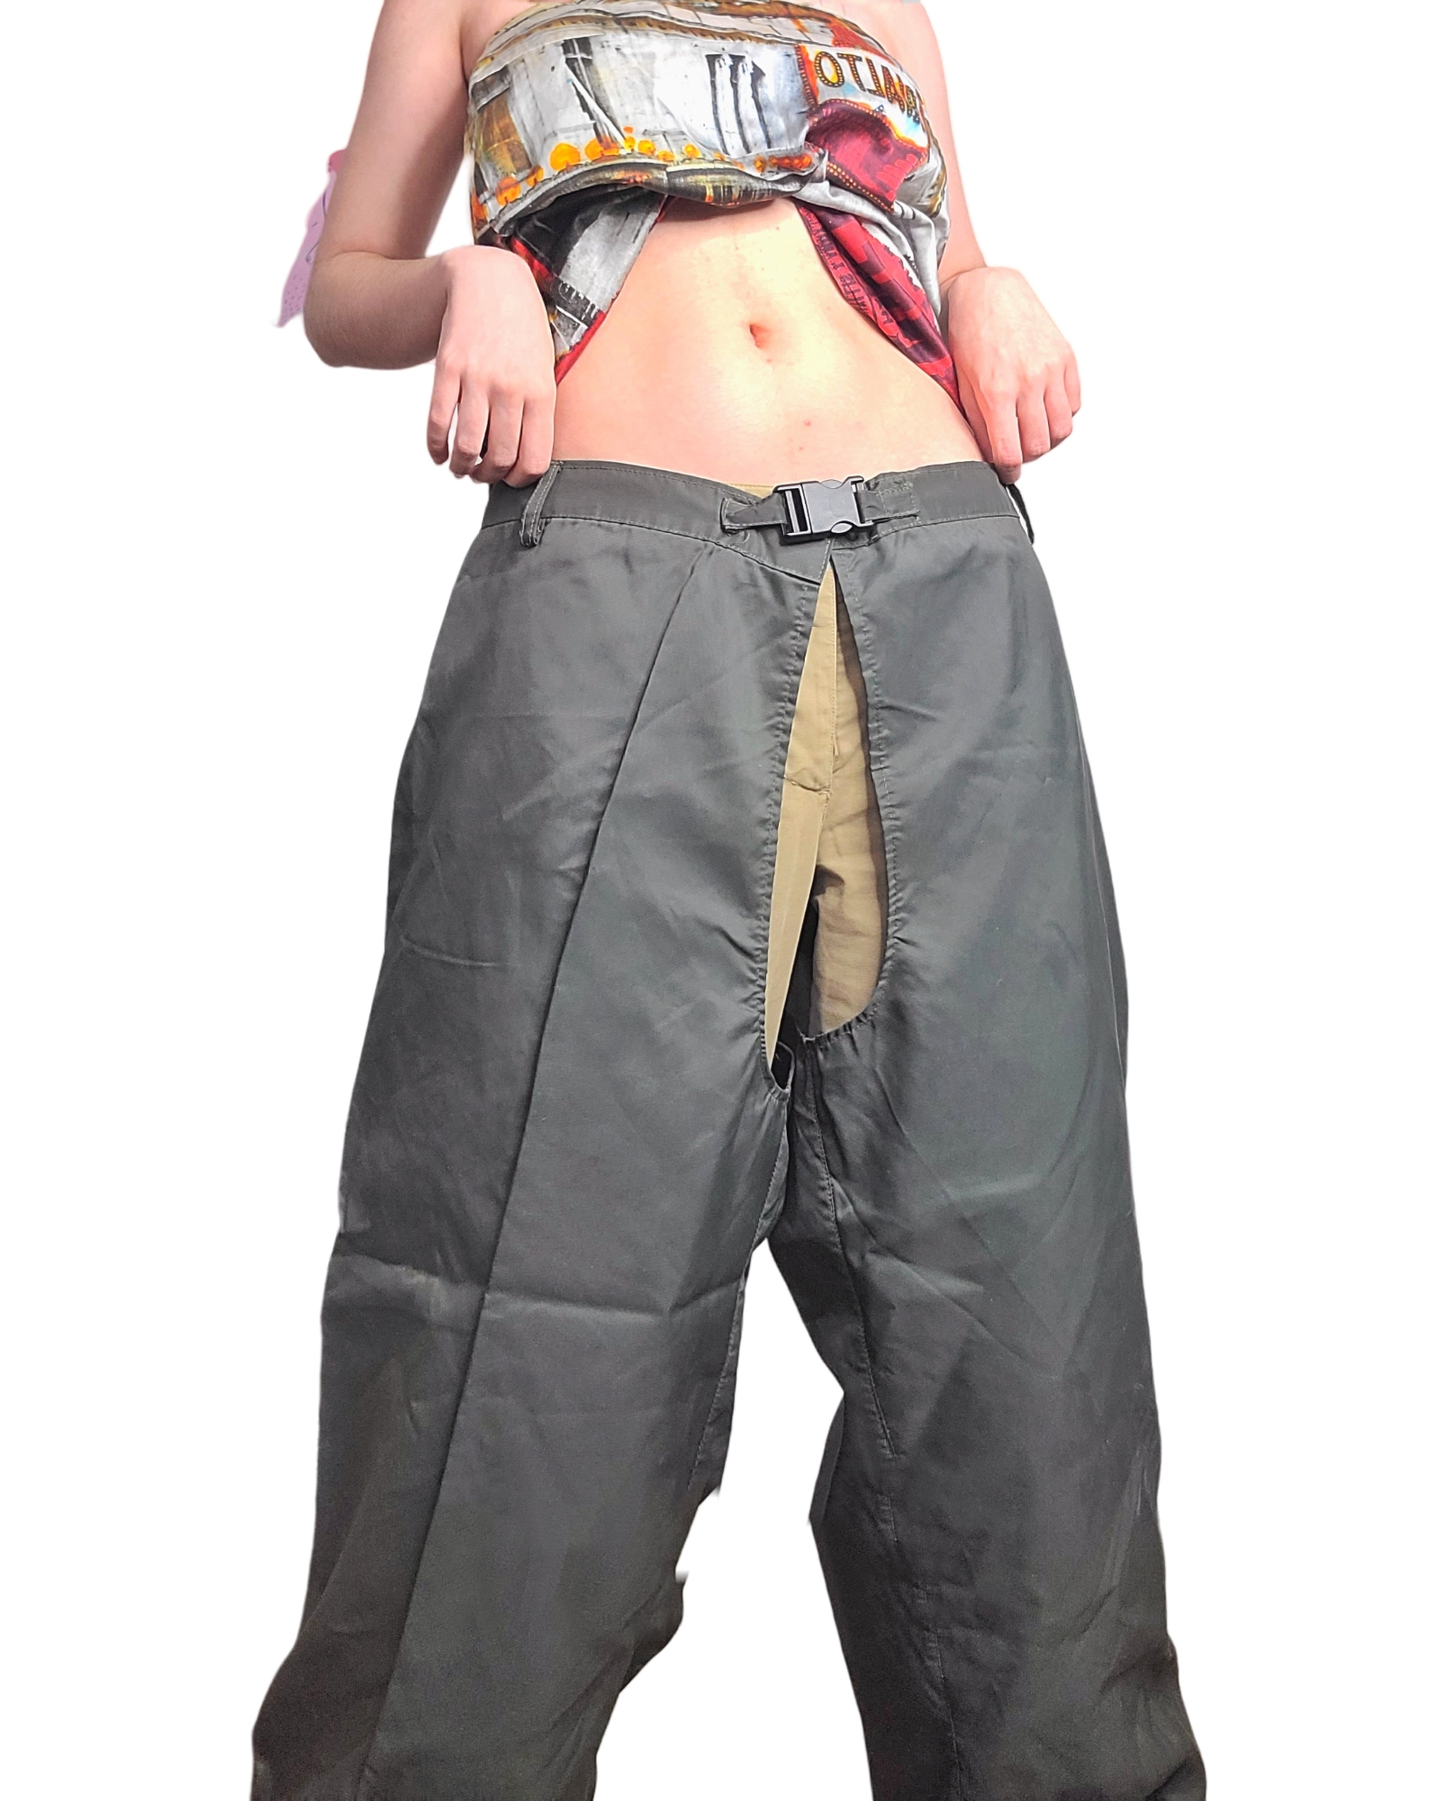 Sur-pantalon gorpcore oversize